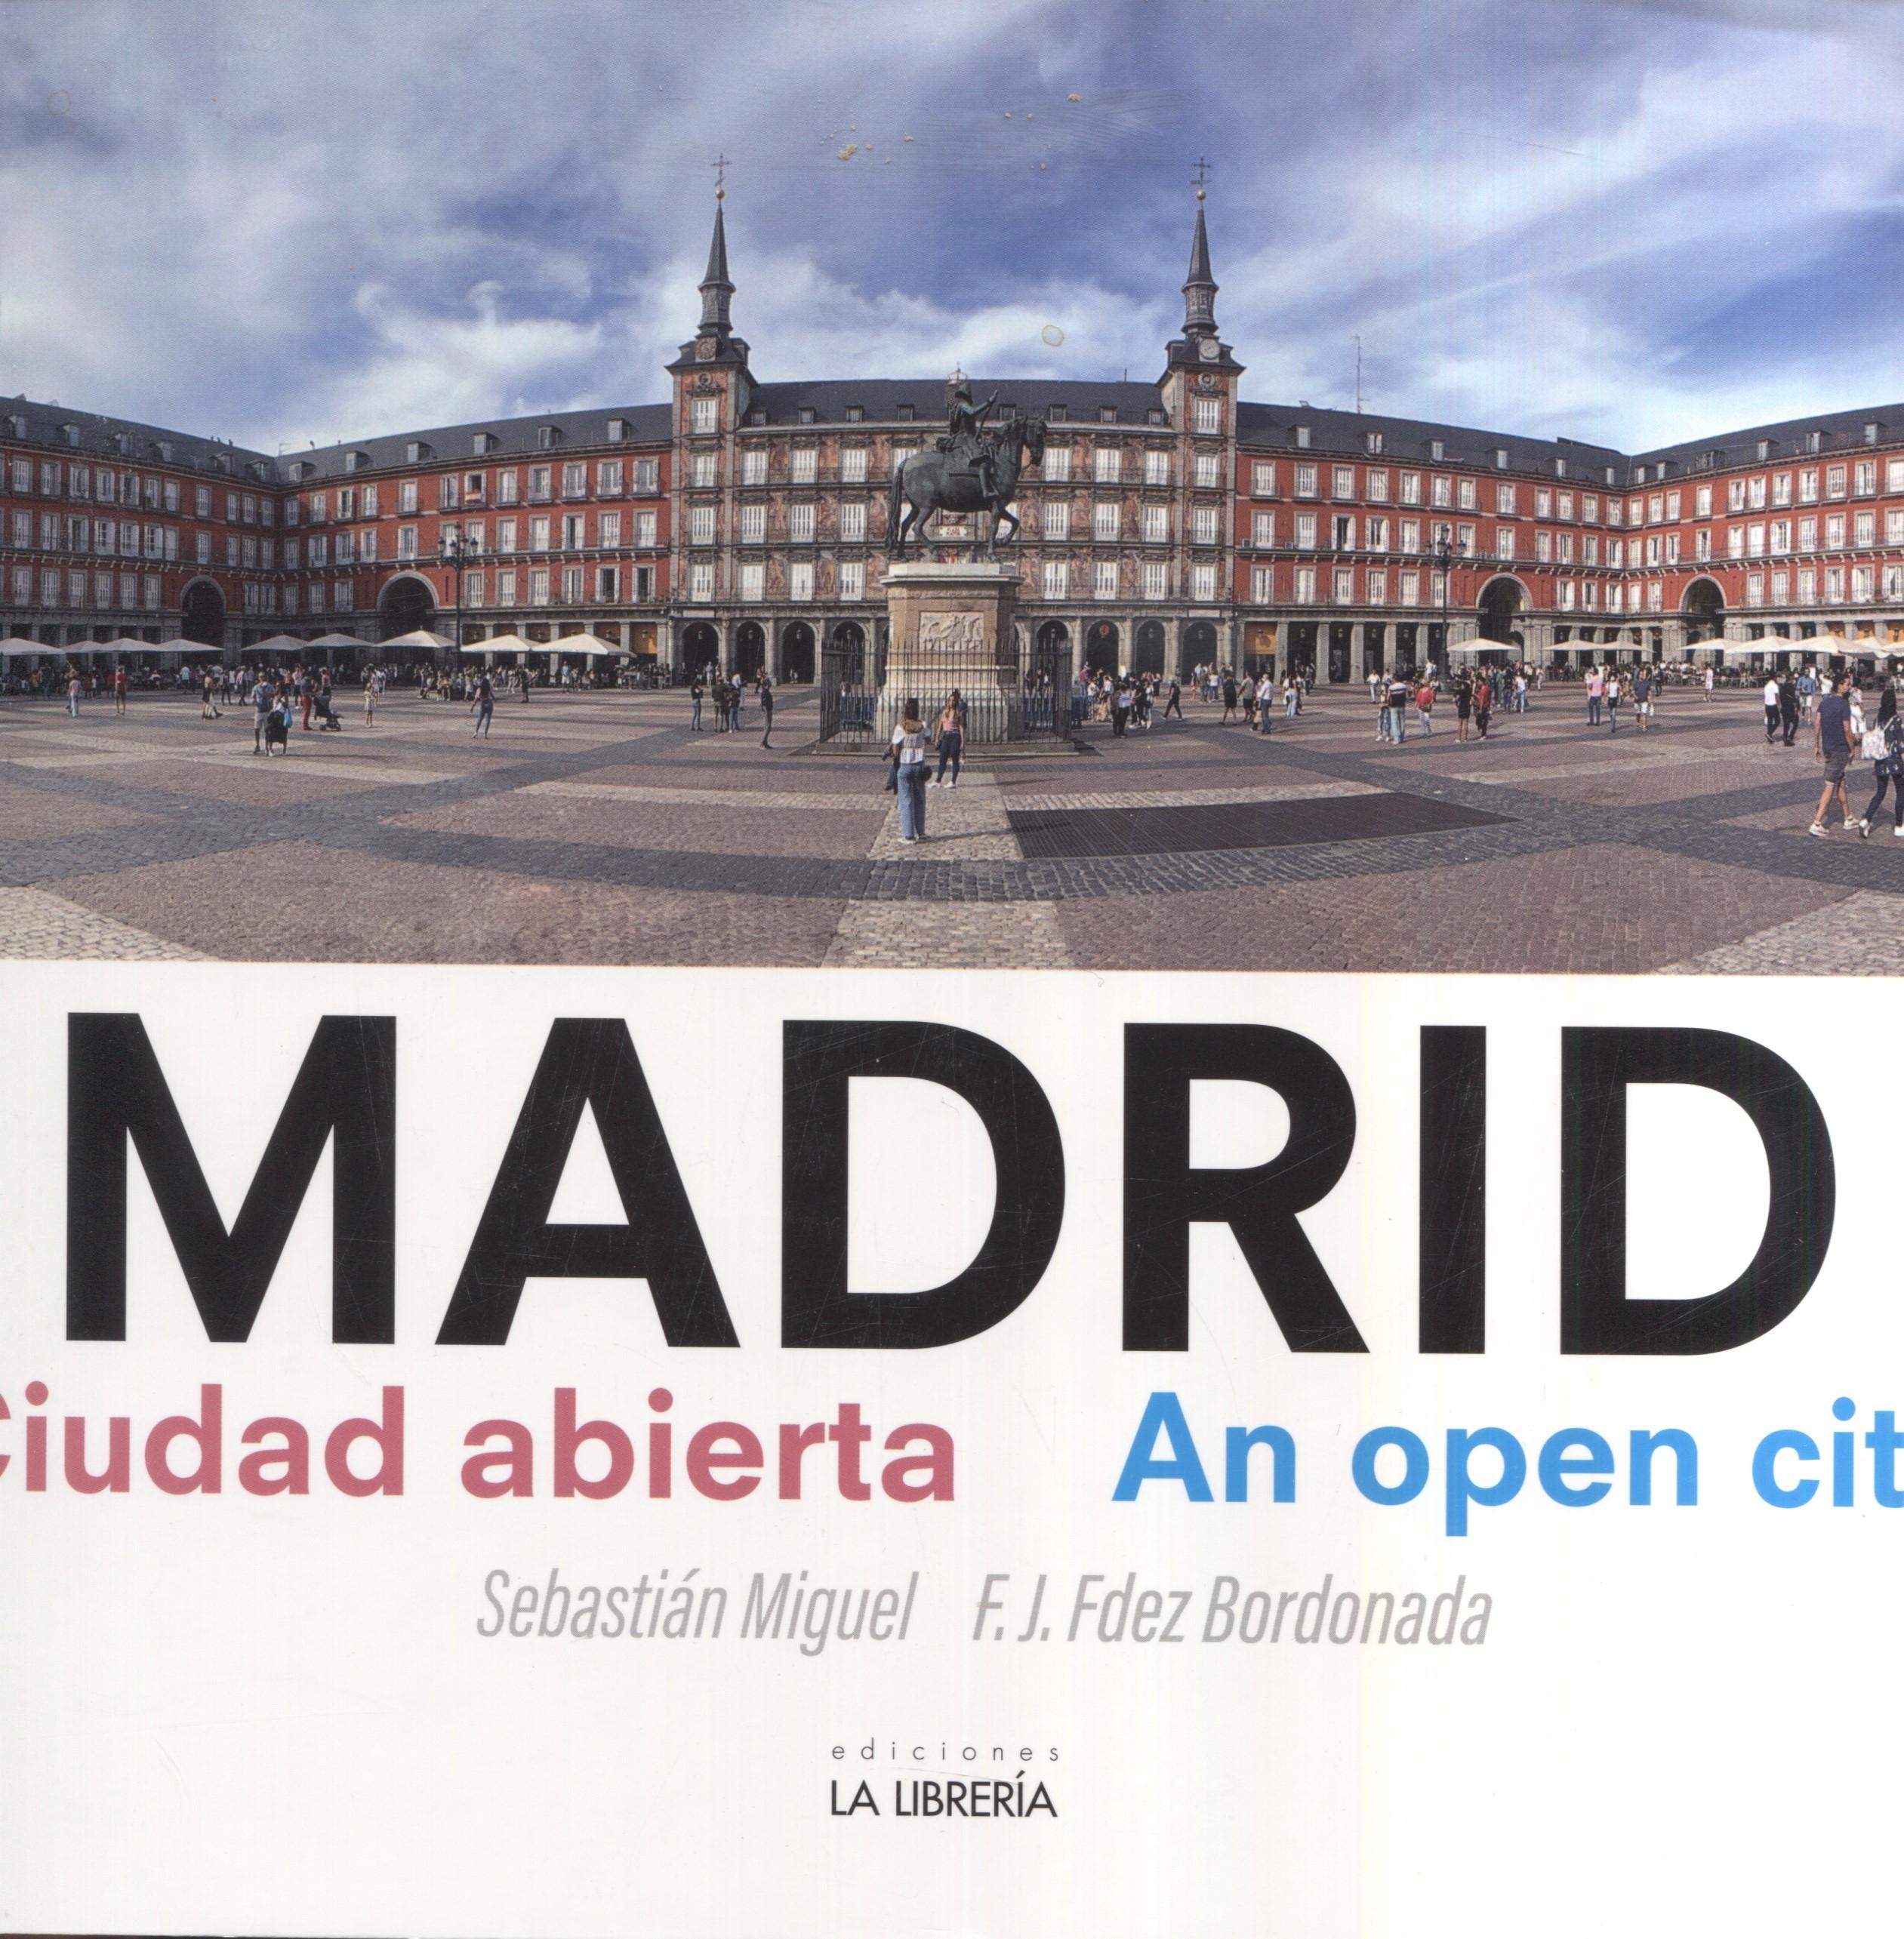 MADRID CIUDAD ABIERTA AN OPEN CITY